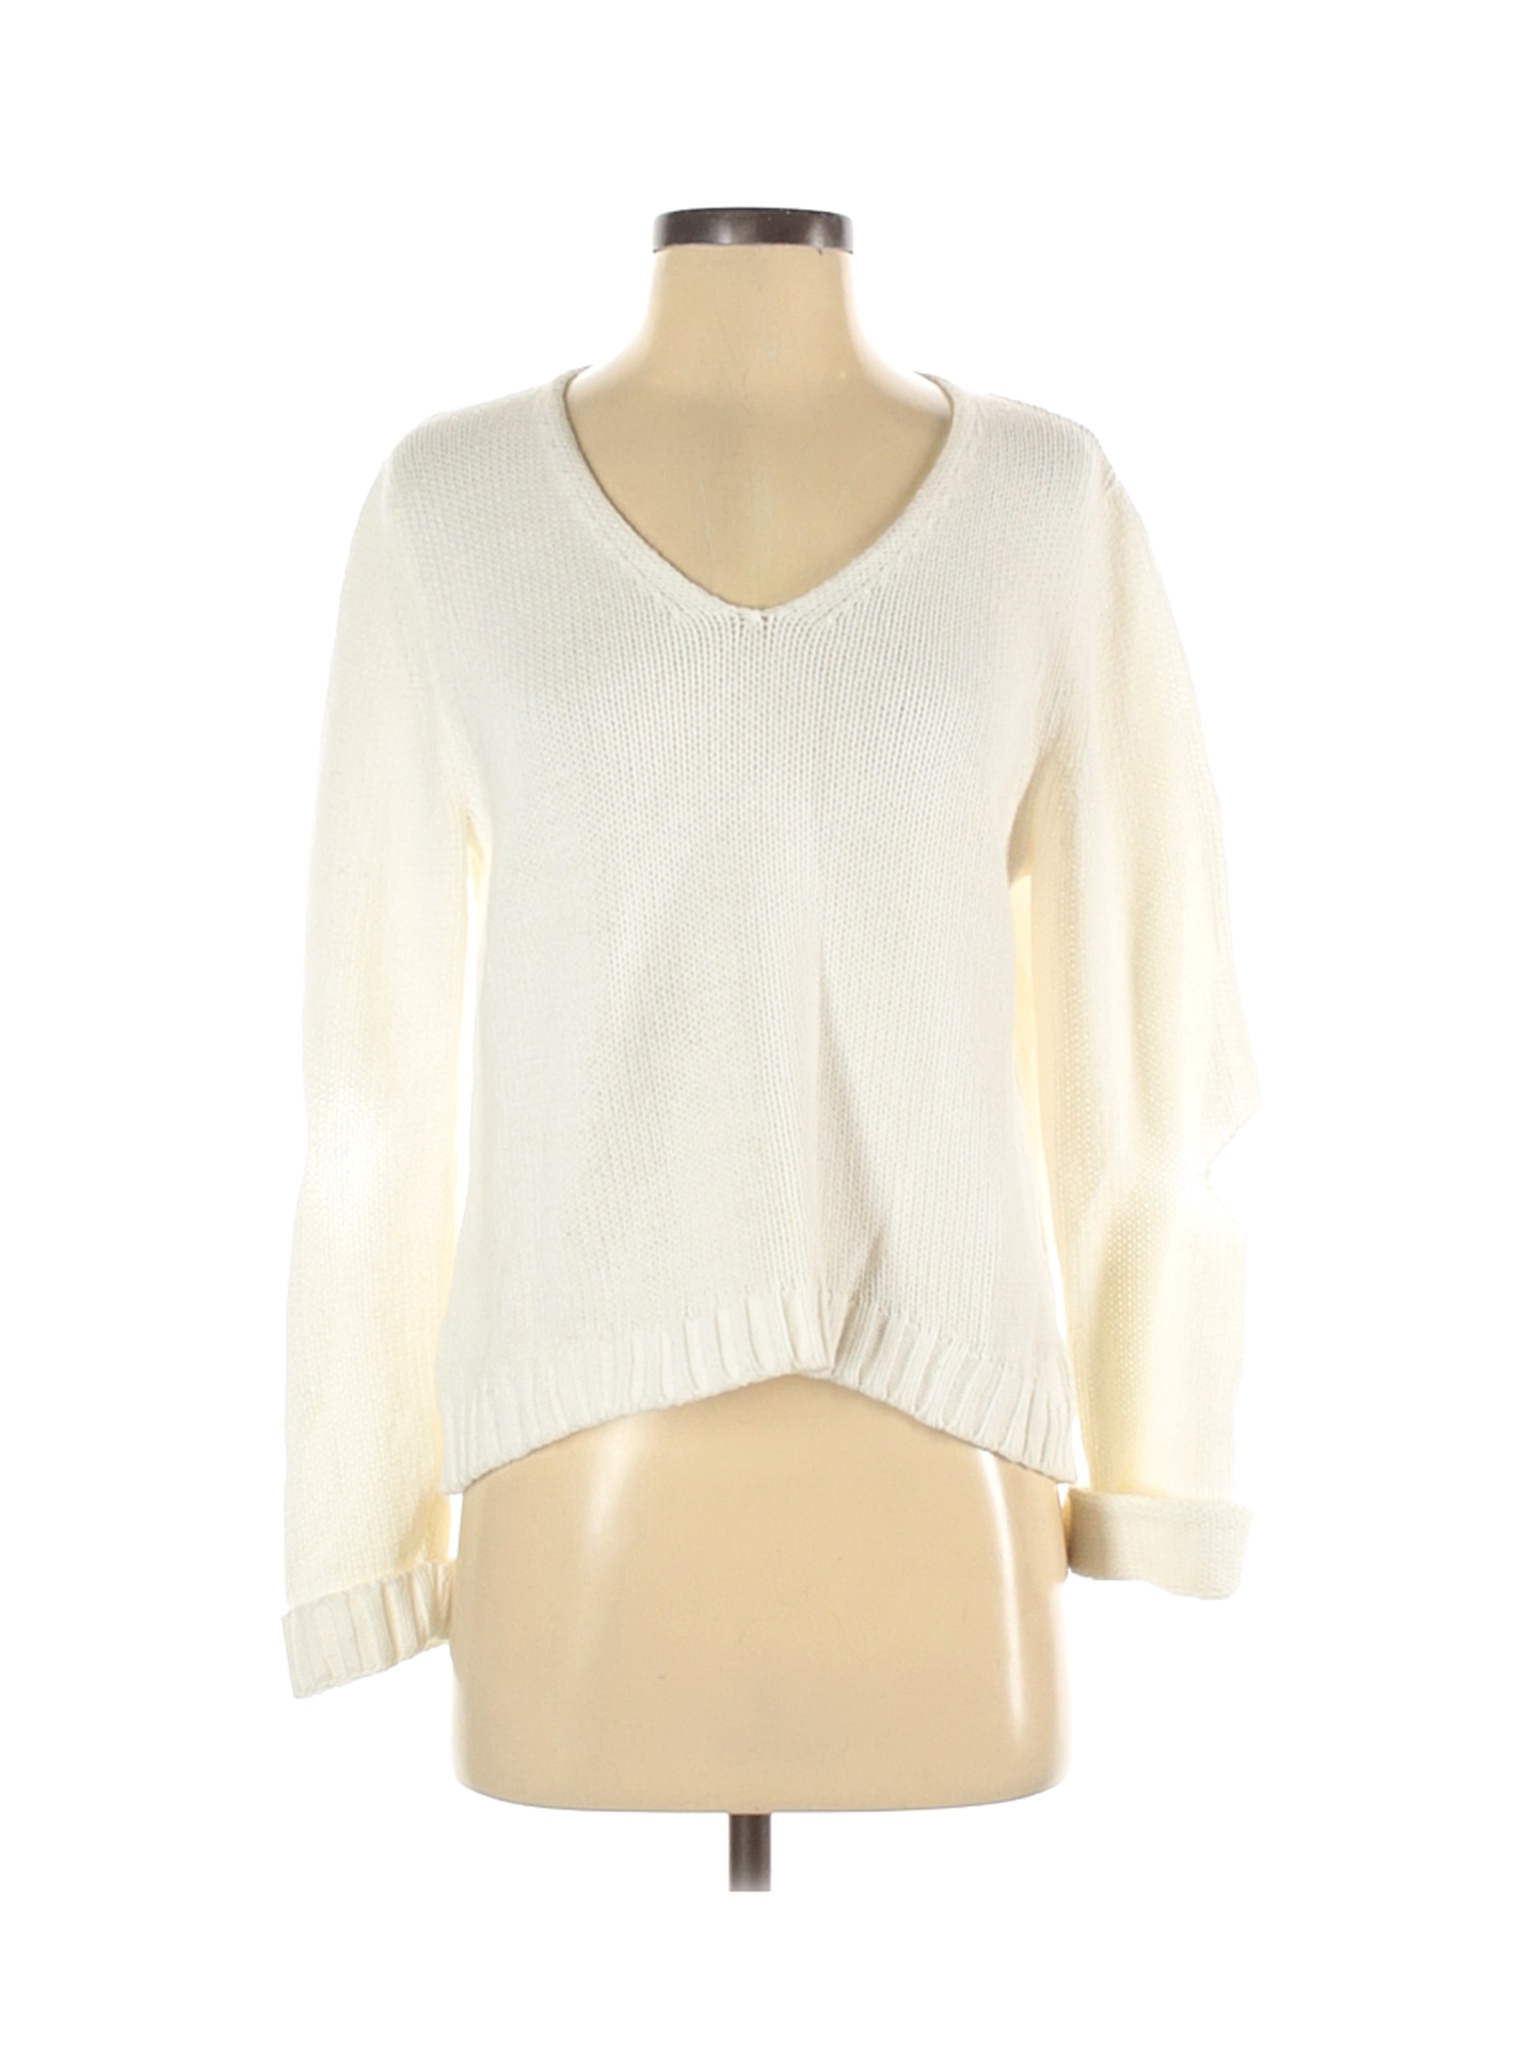 Margaret O'Leary Women Ivory Pullover Sweater S | eBay